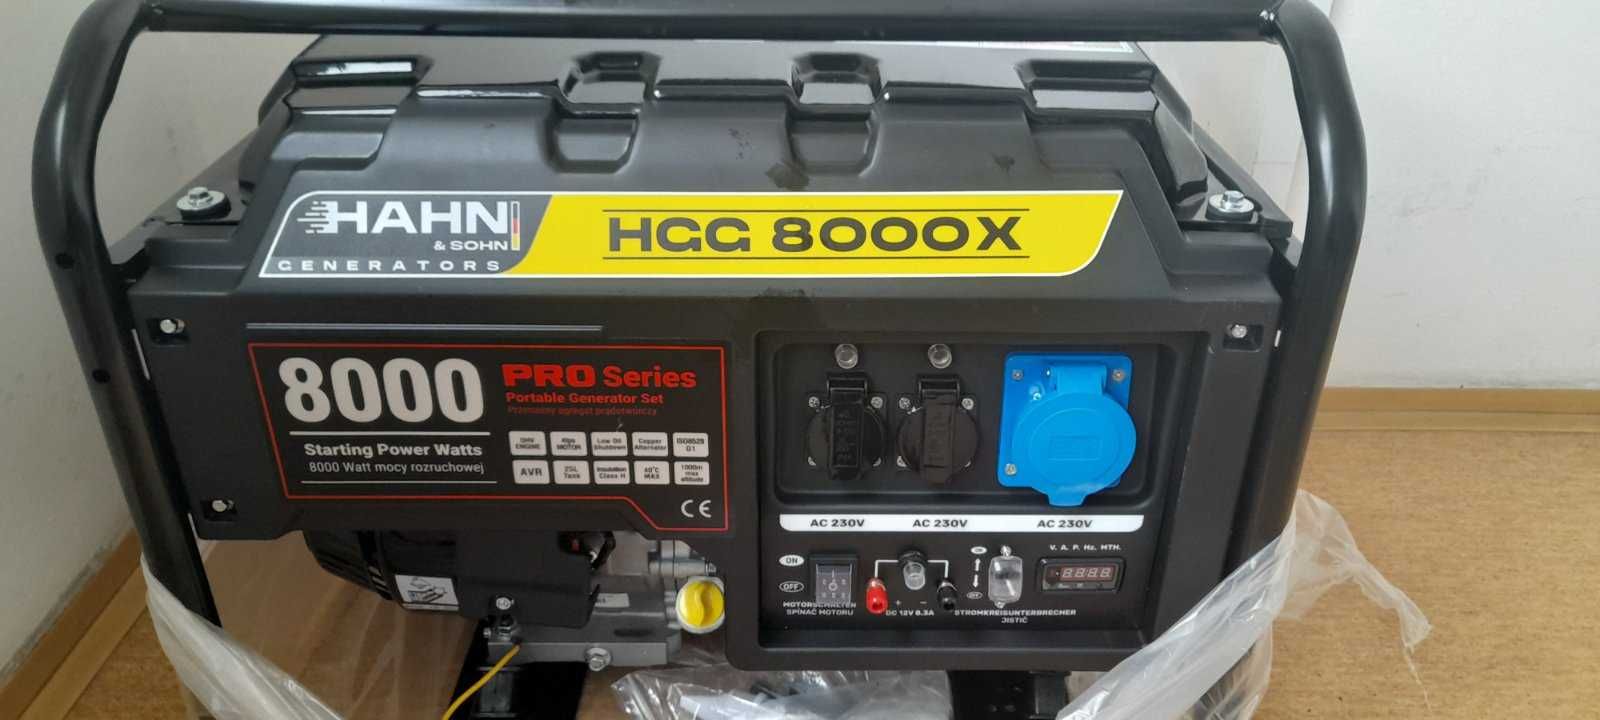 Продам генератор Hahn & Sohn HGG 8000X 6,5 kW